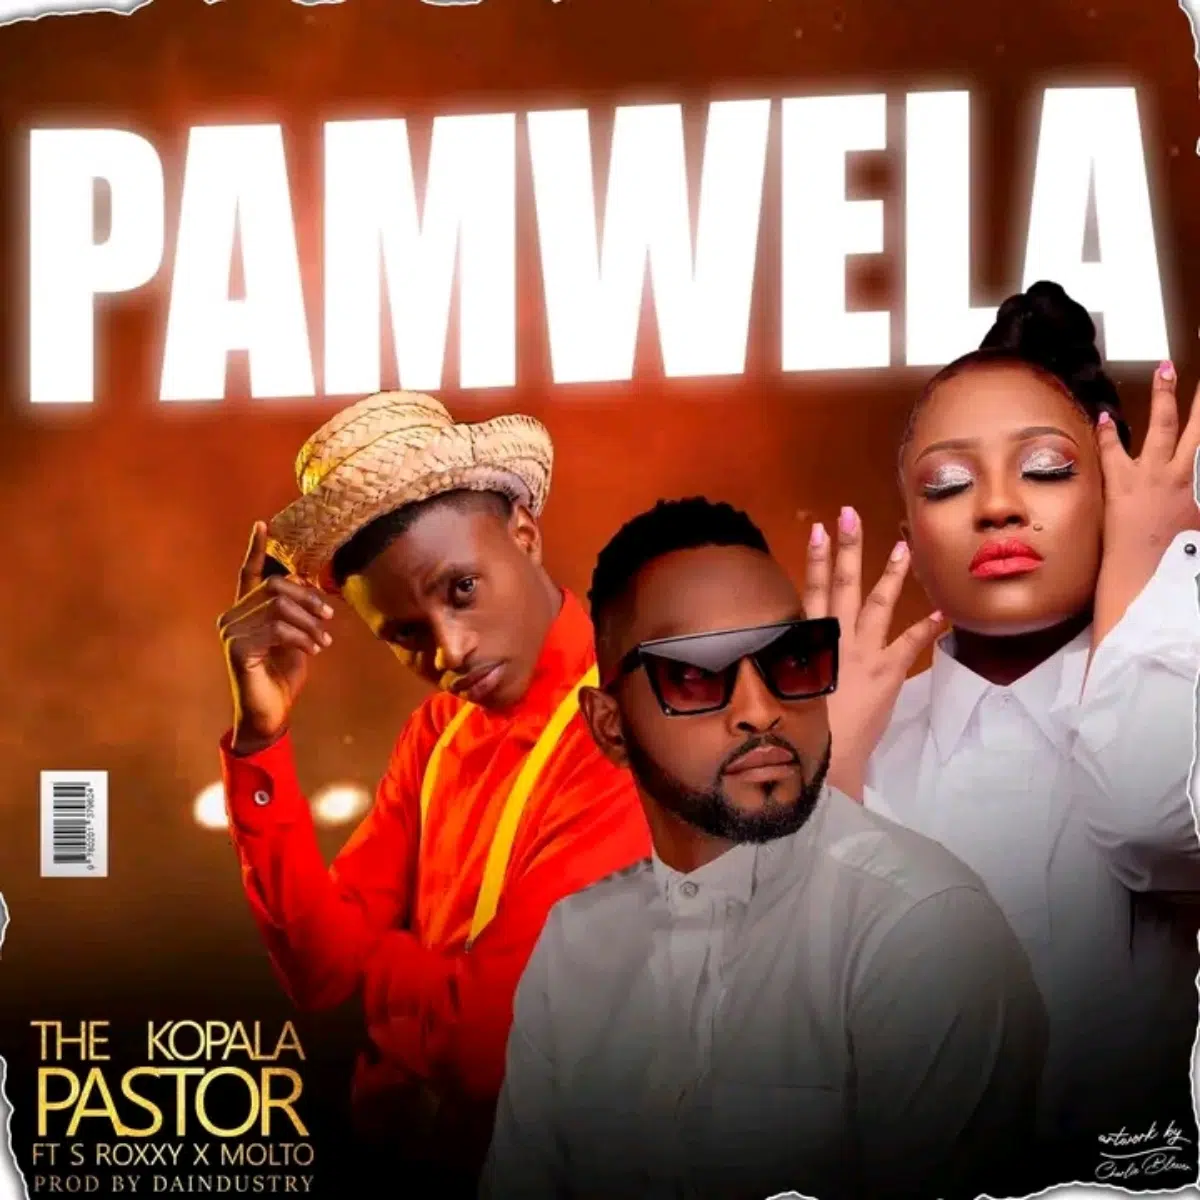 DOWNLOAD: The Kopala Pastor Ft S Roxxy & Molto – “Pamwela” Mp3